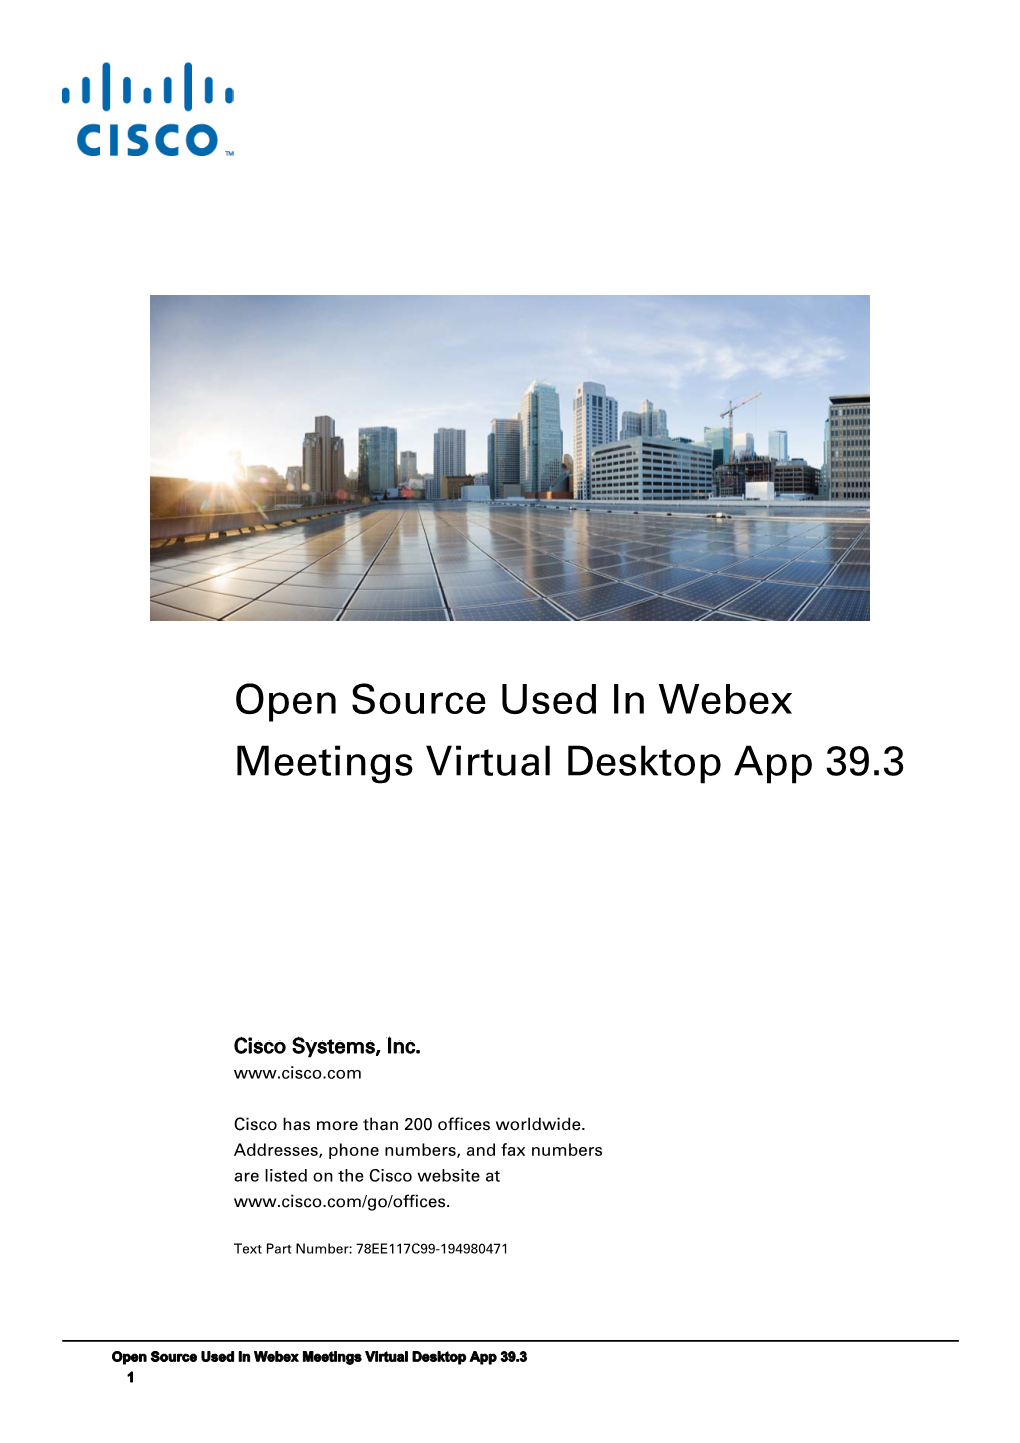 Licensing Information for Cisco Webex Meetings Virtual Desktop App (WBS39.3)